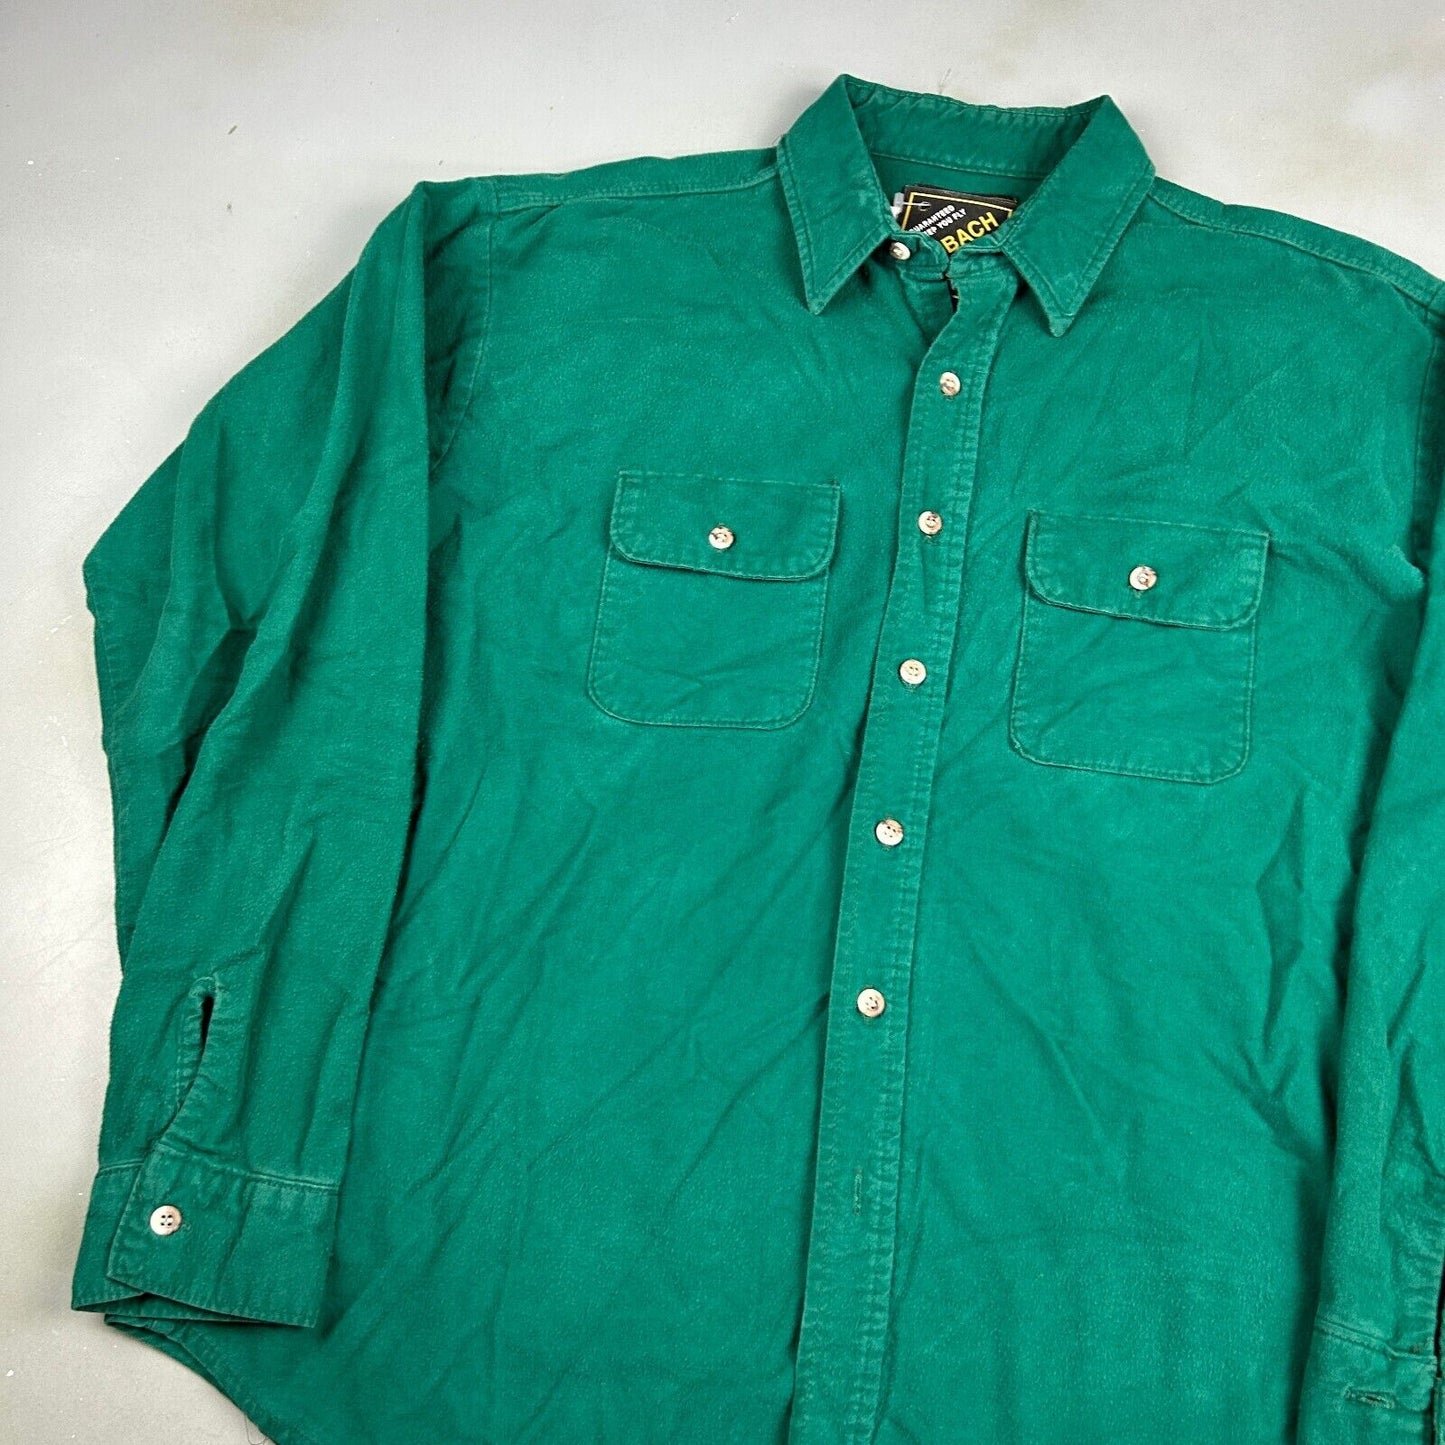 VINTAGE Croft & Barrow Green Chamois Cloth Button Up Shirt sz XL Adult